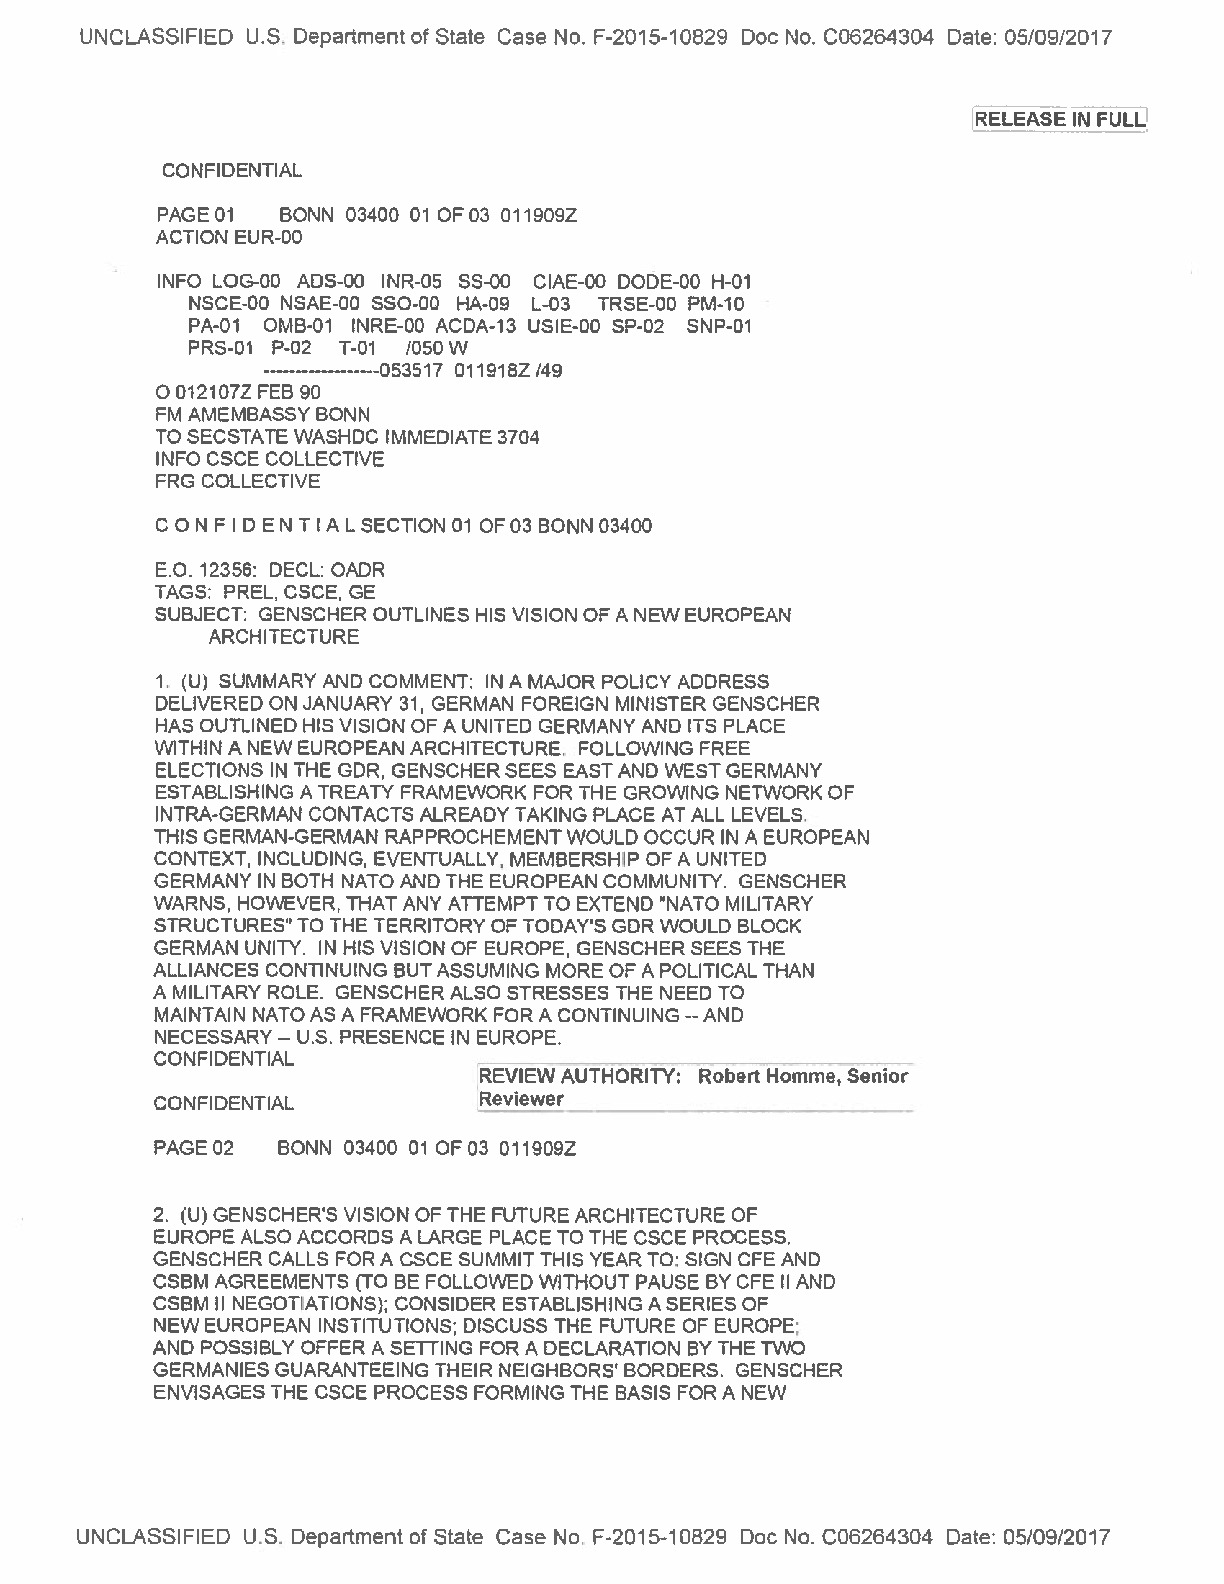 Document-01-U-S-Embassy-Bonn-Confidential-Cable